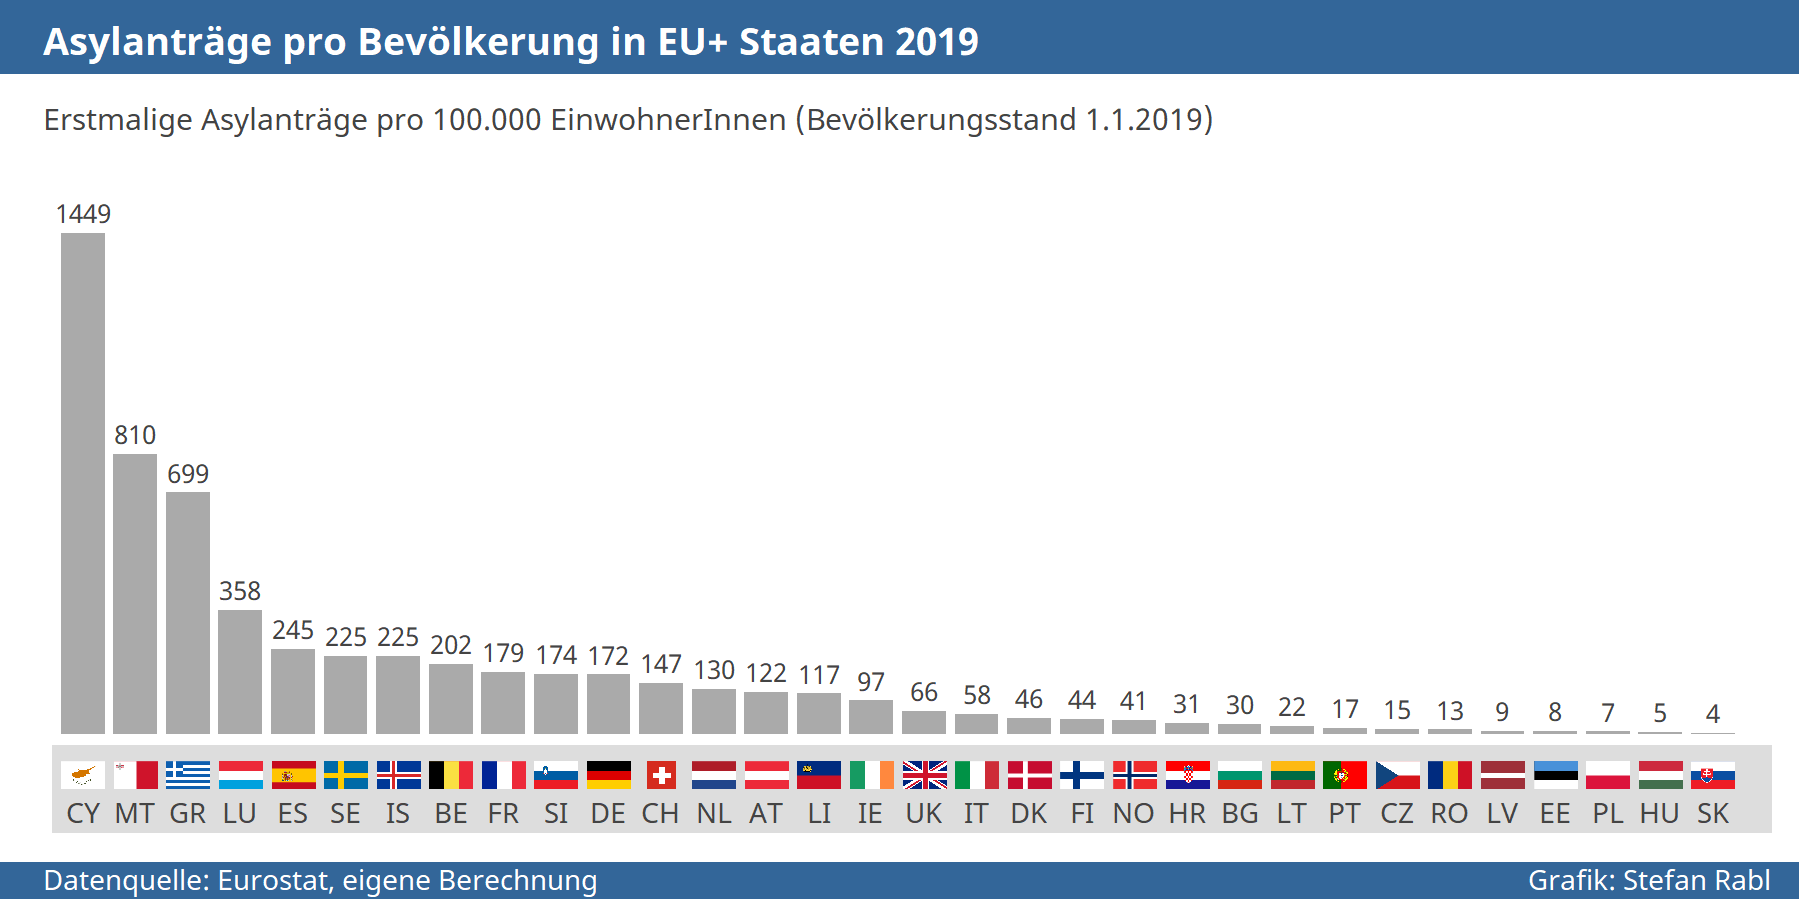 Grafik: Asylantragszahlen pro Bevölkerung in den einzelnen EU+ Staaten 2019